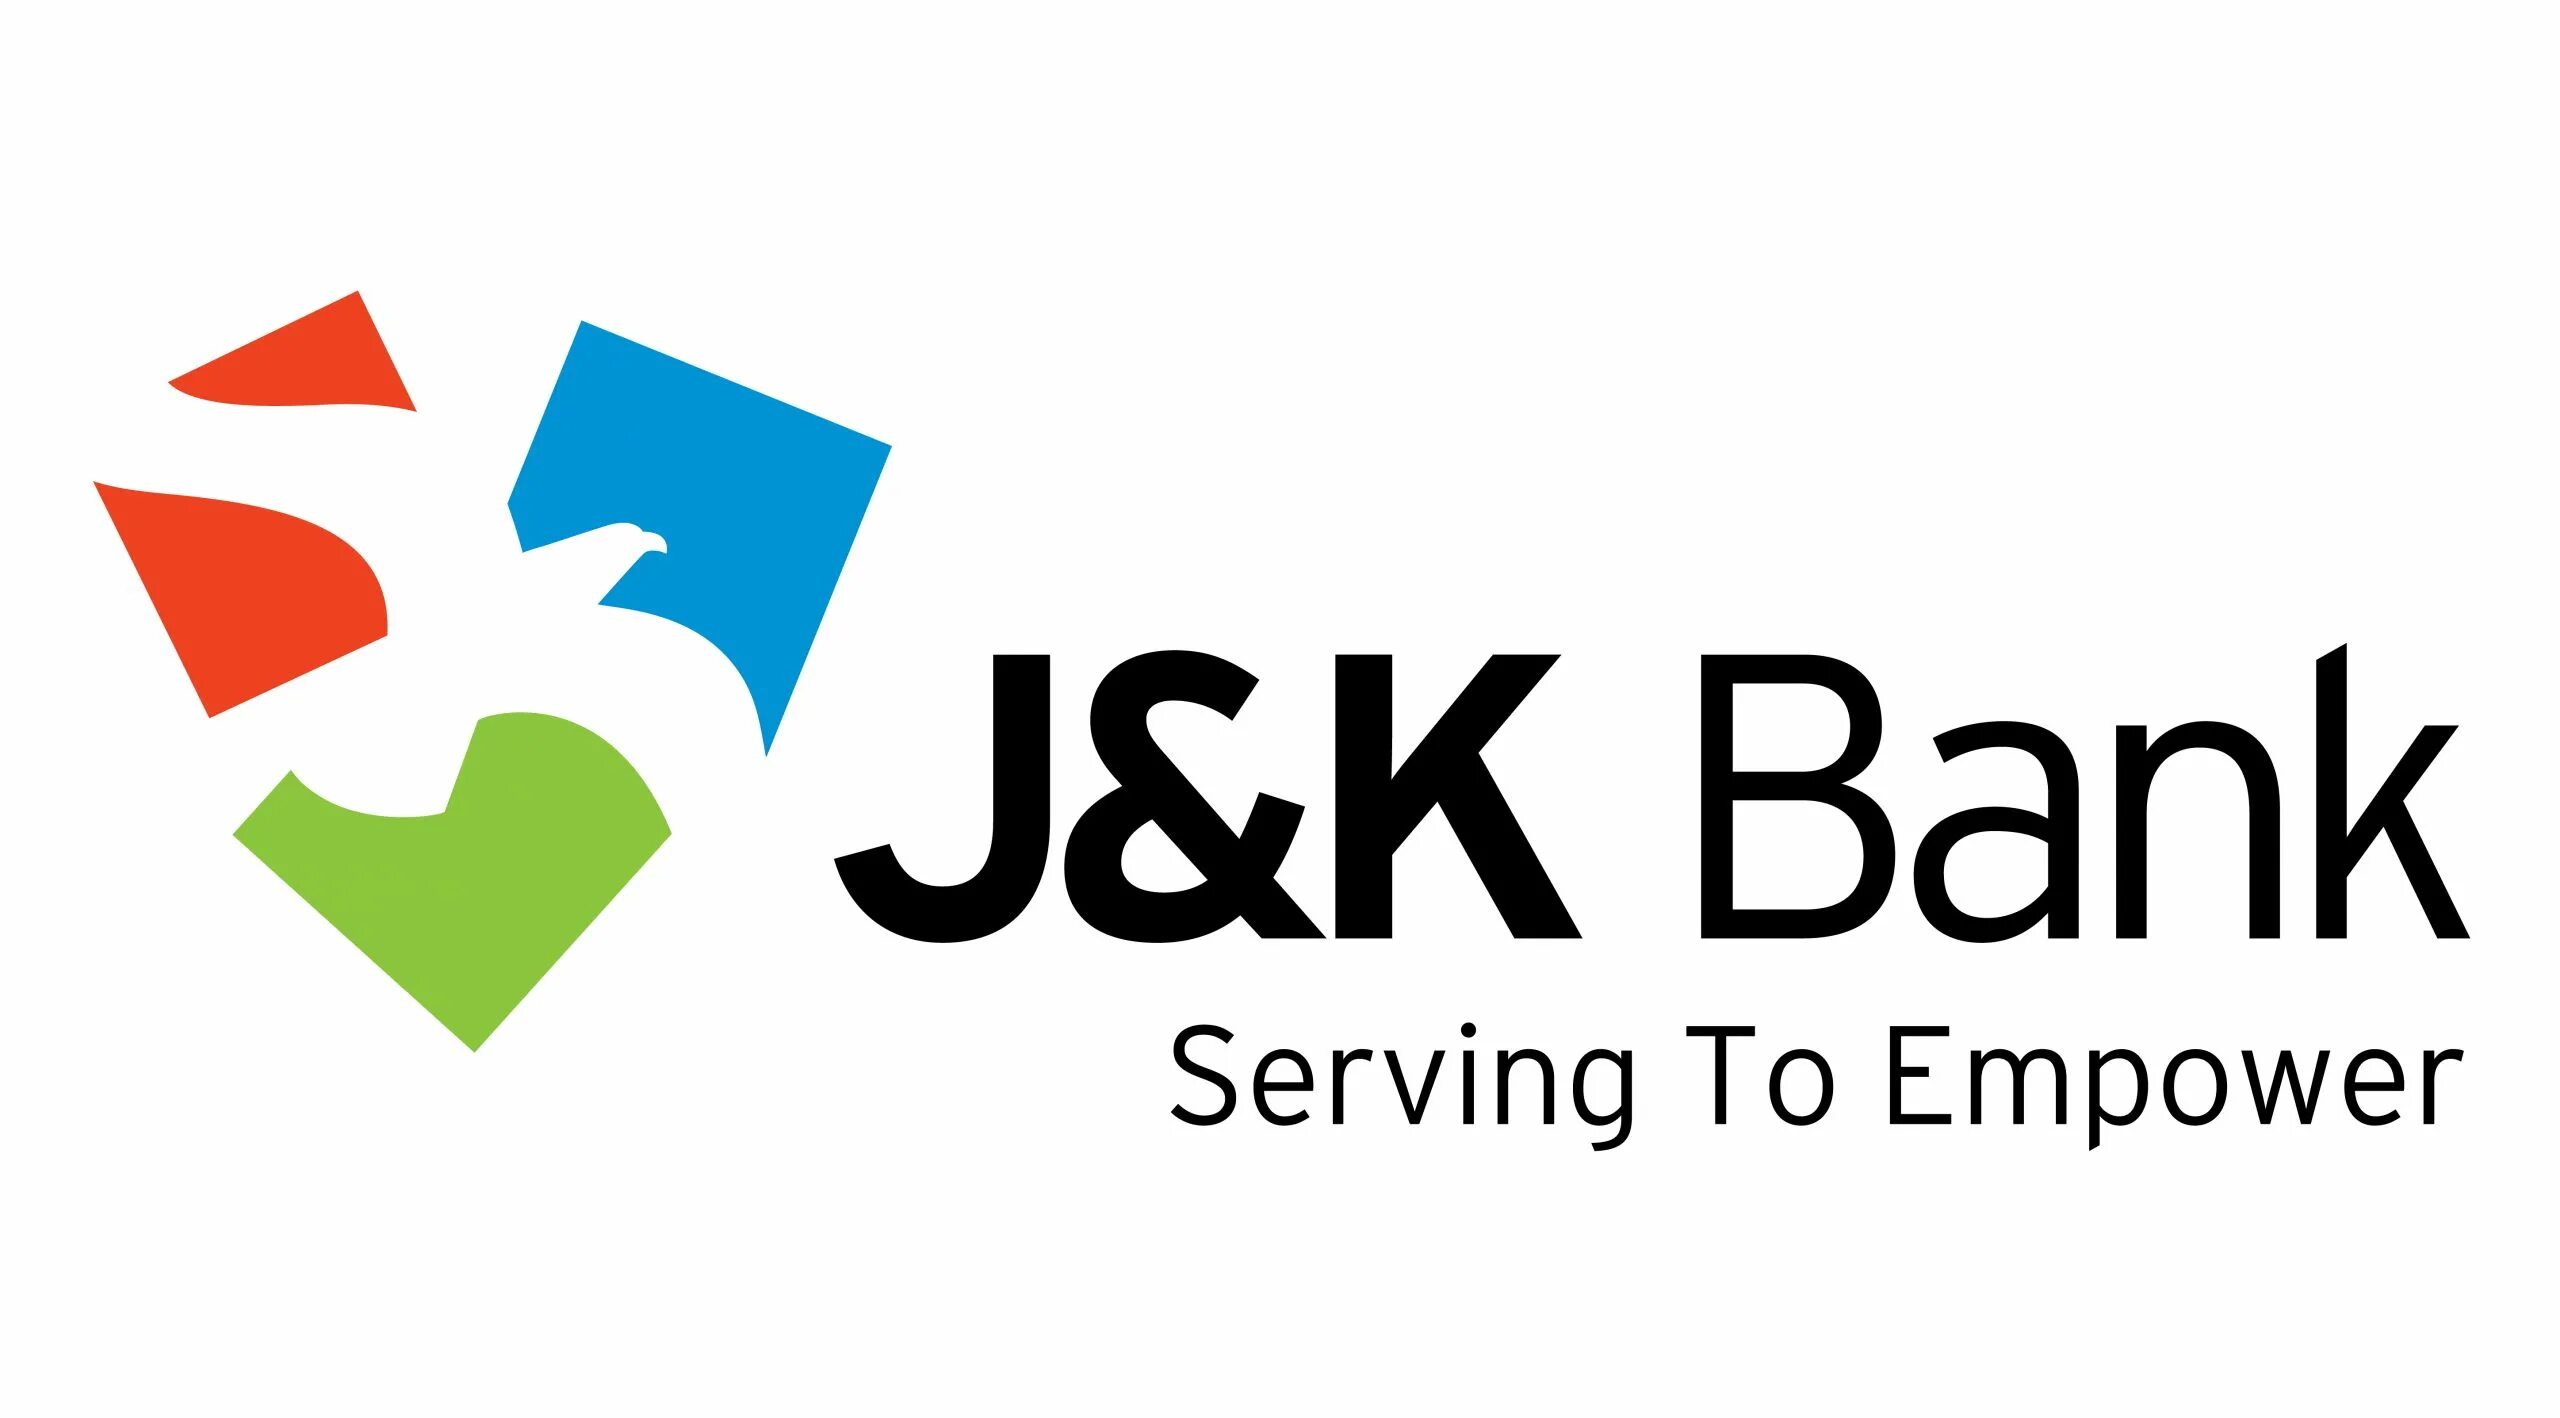 Ban service. Банк k. Логотипы банков. Банк Индии лого. M Bank логотип.